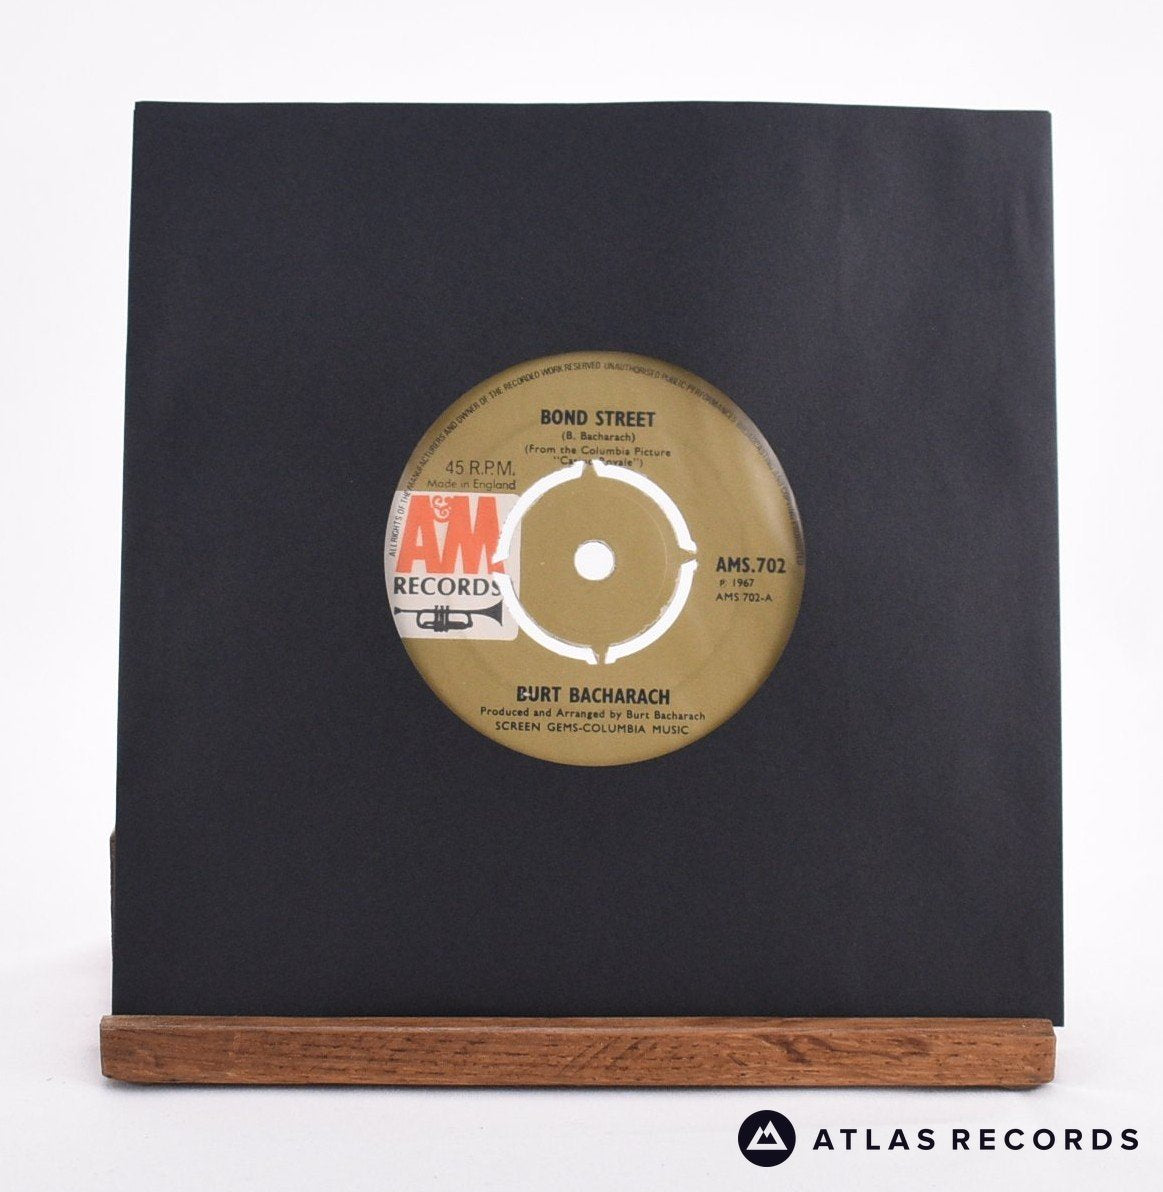 Burt Bacharach Bond Street 7" Vinyl Record - In Sleeve